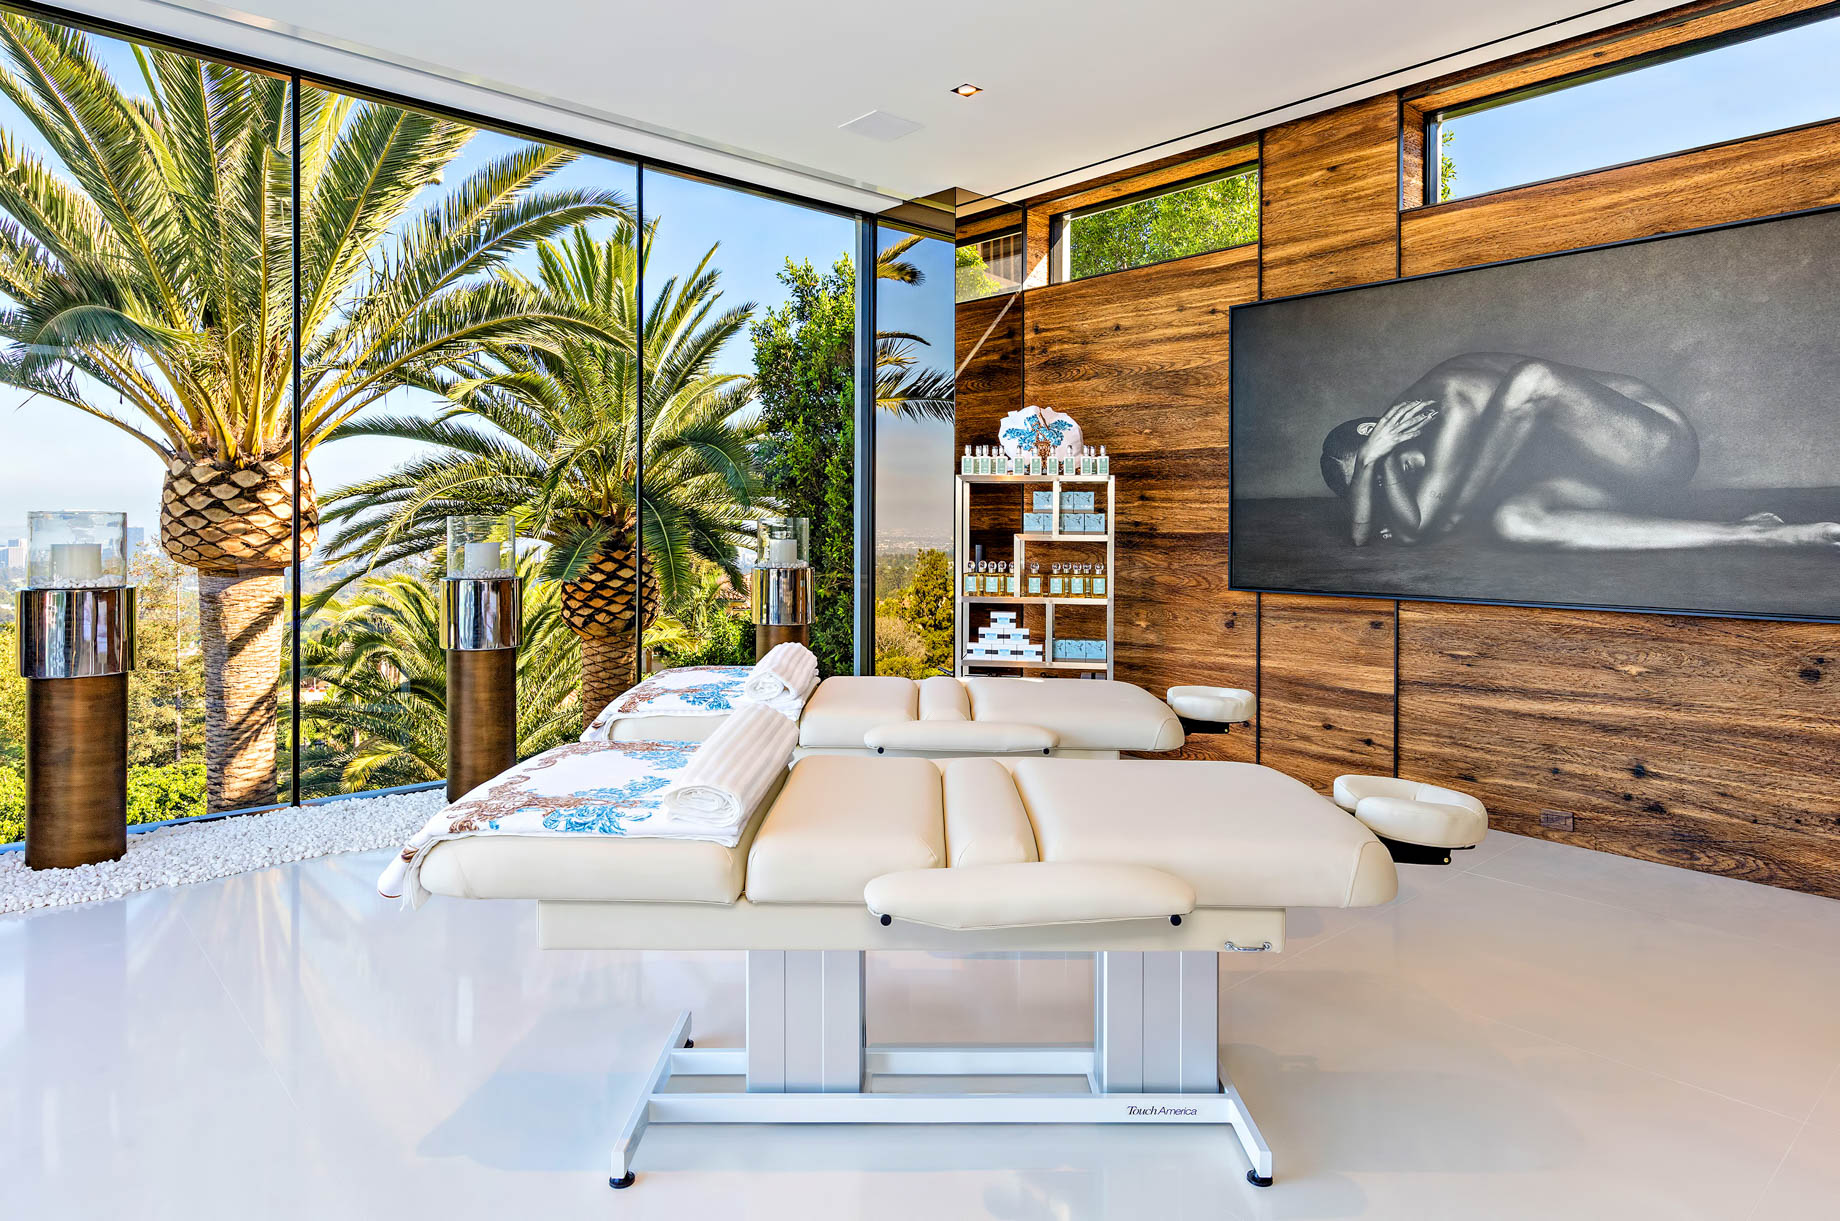 Luxury Residence - 924 Bel Air Rd, Los Angeles, CA, USA